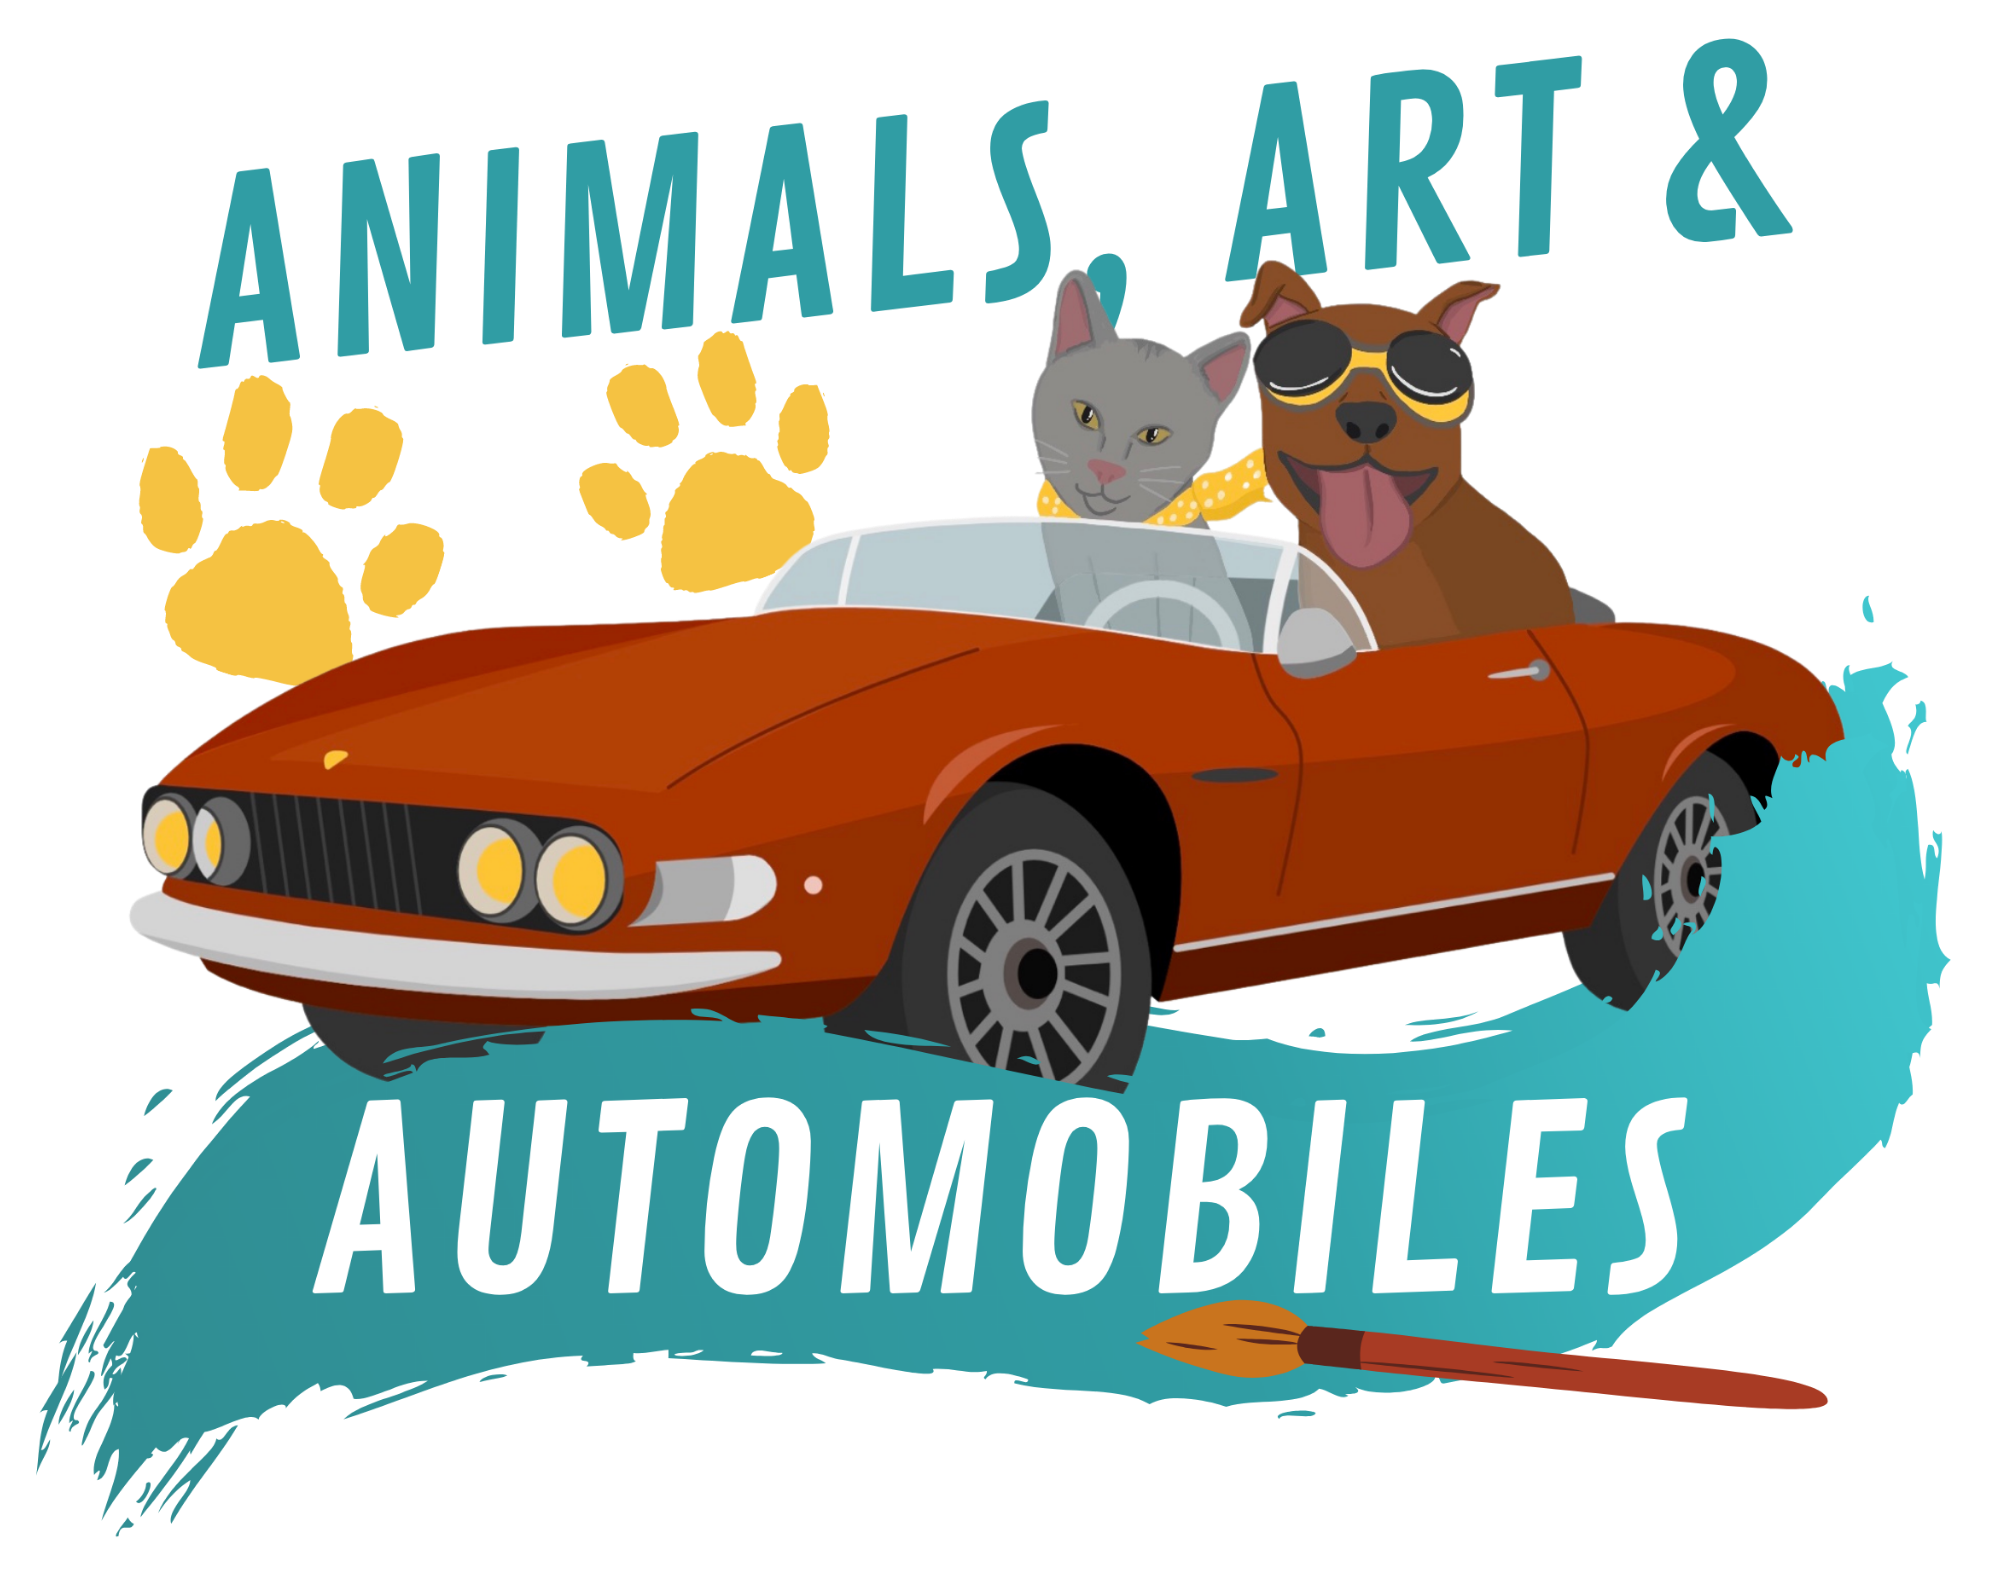 Hallie Hill Animal Sanctuary Animals Art and Automobiles